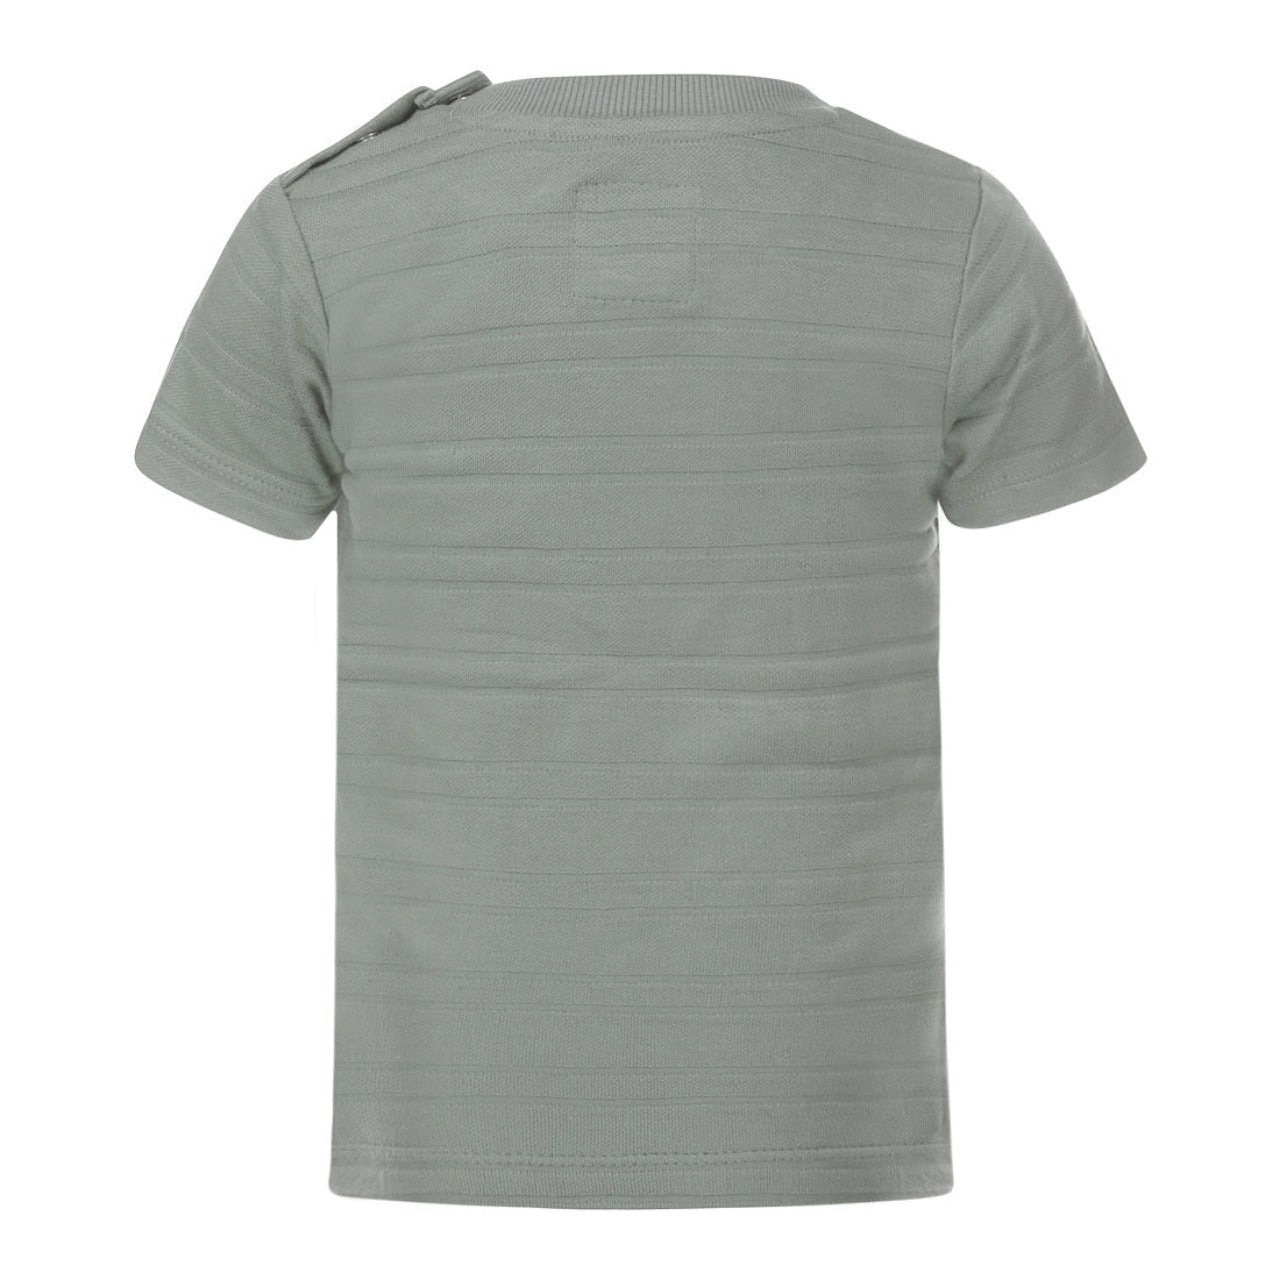 T-shirt Dusty Green with stripe pattern